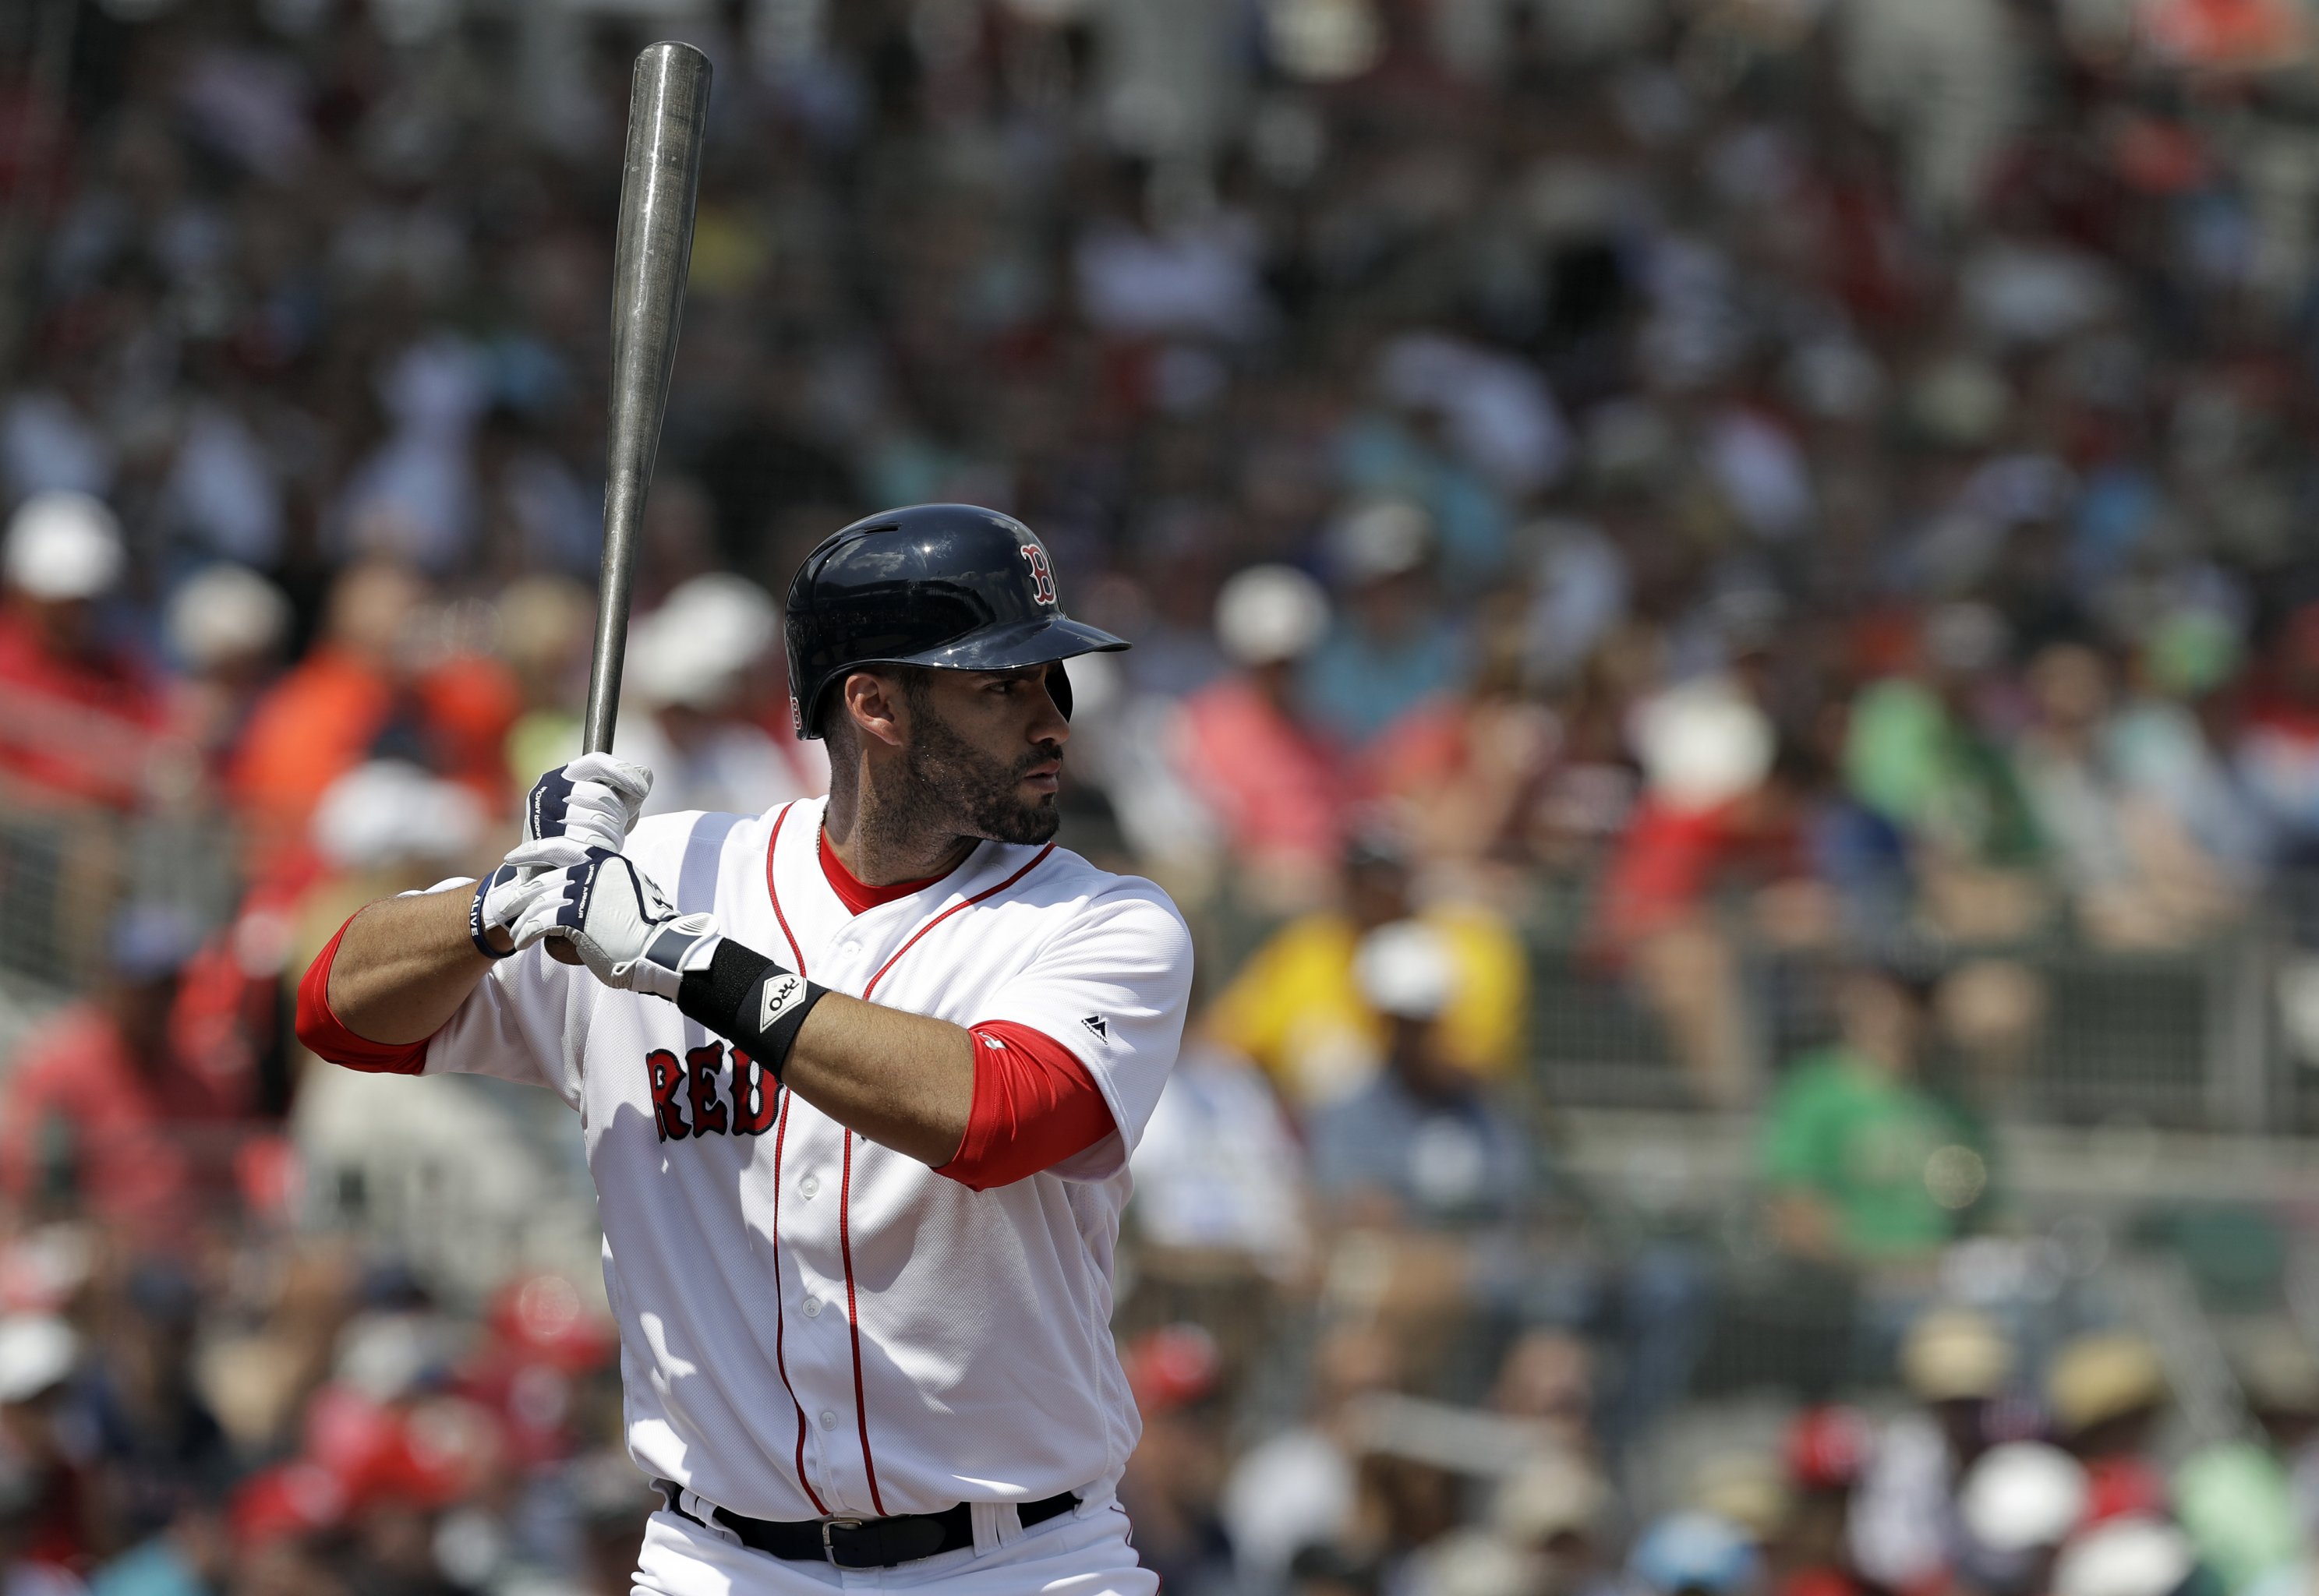 MLB roundup: Bartolo Colon, A's shut down Rangers - The Boston Globe